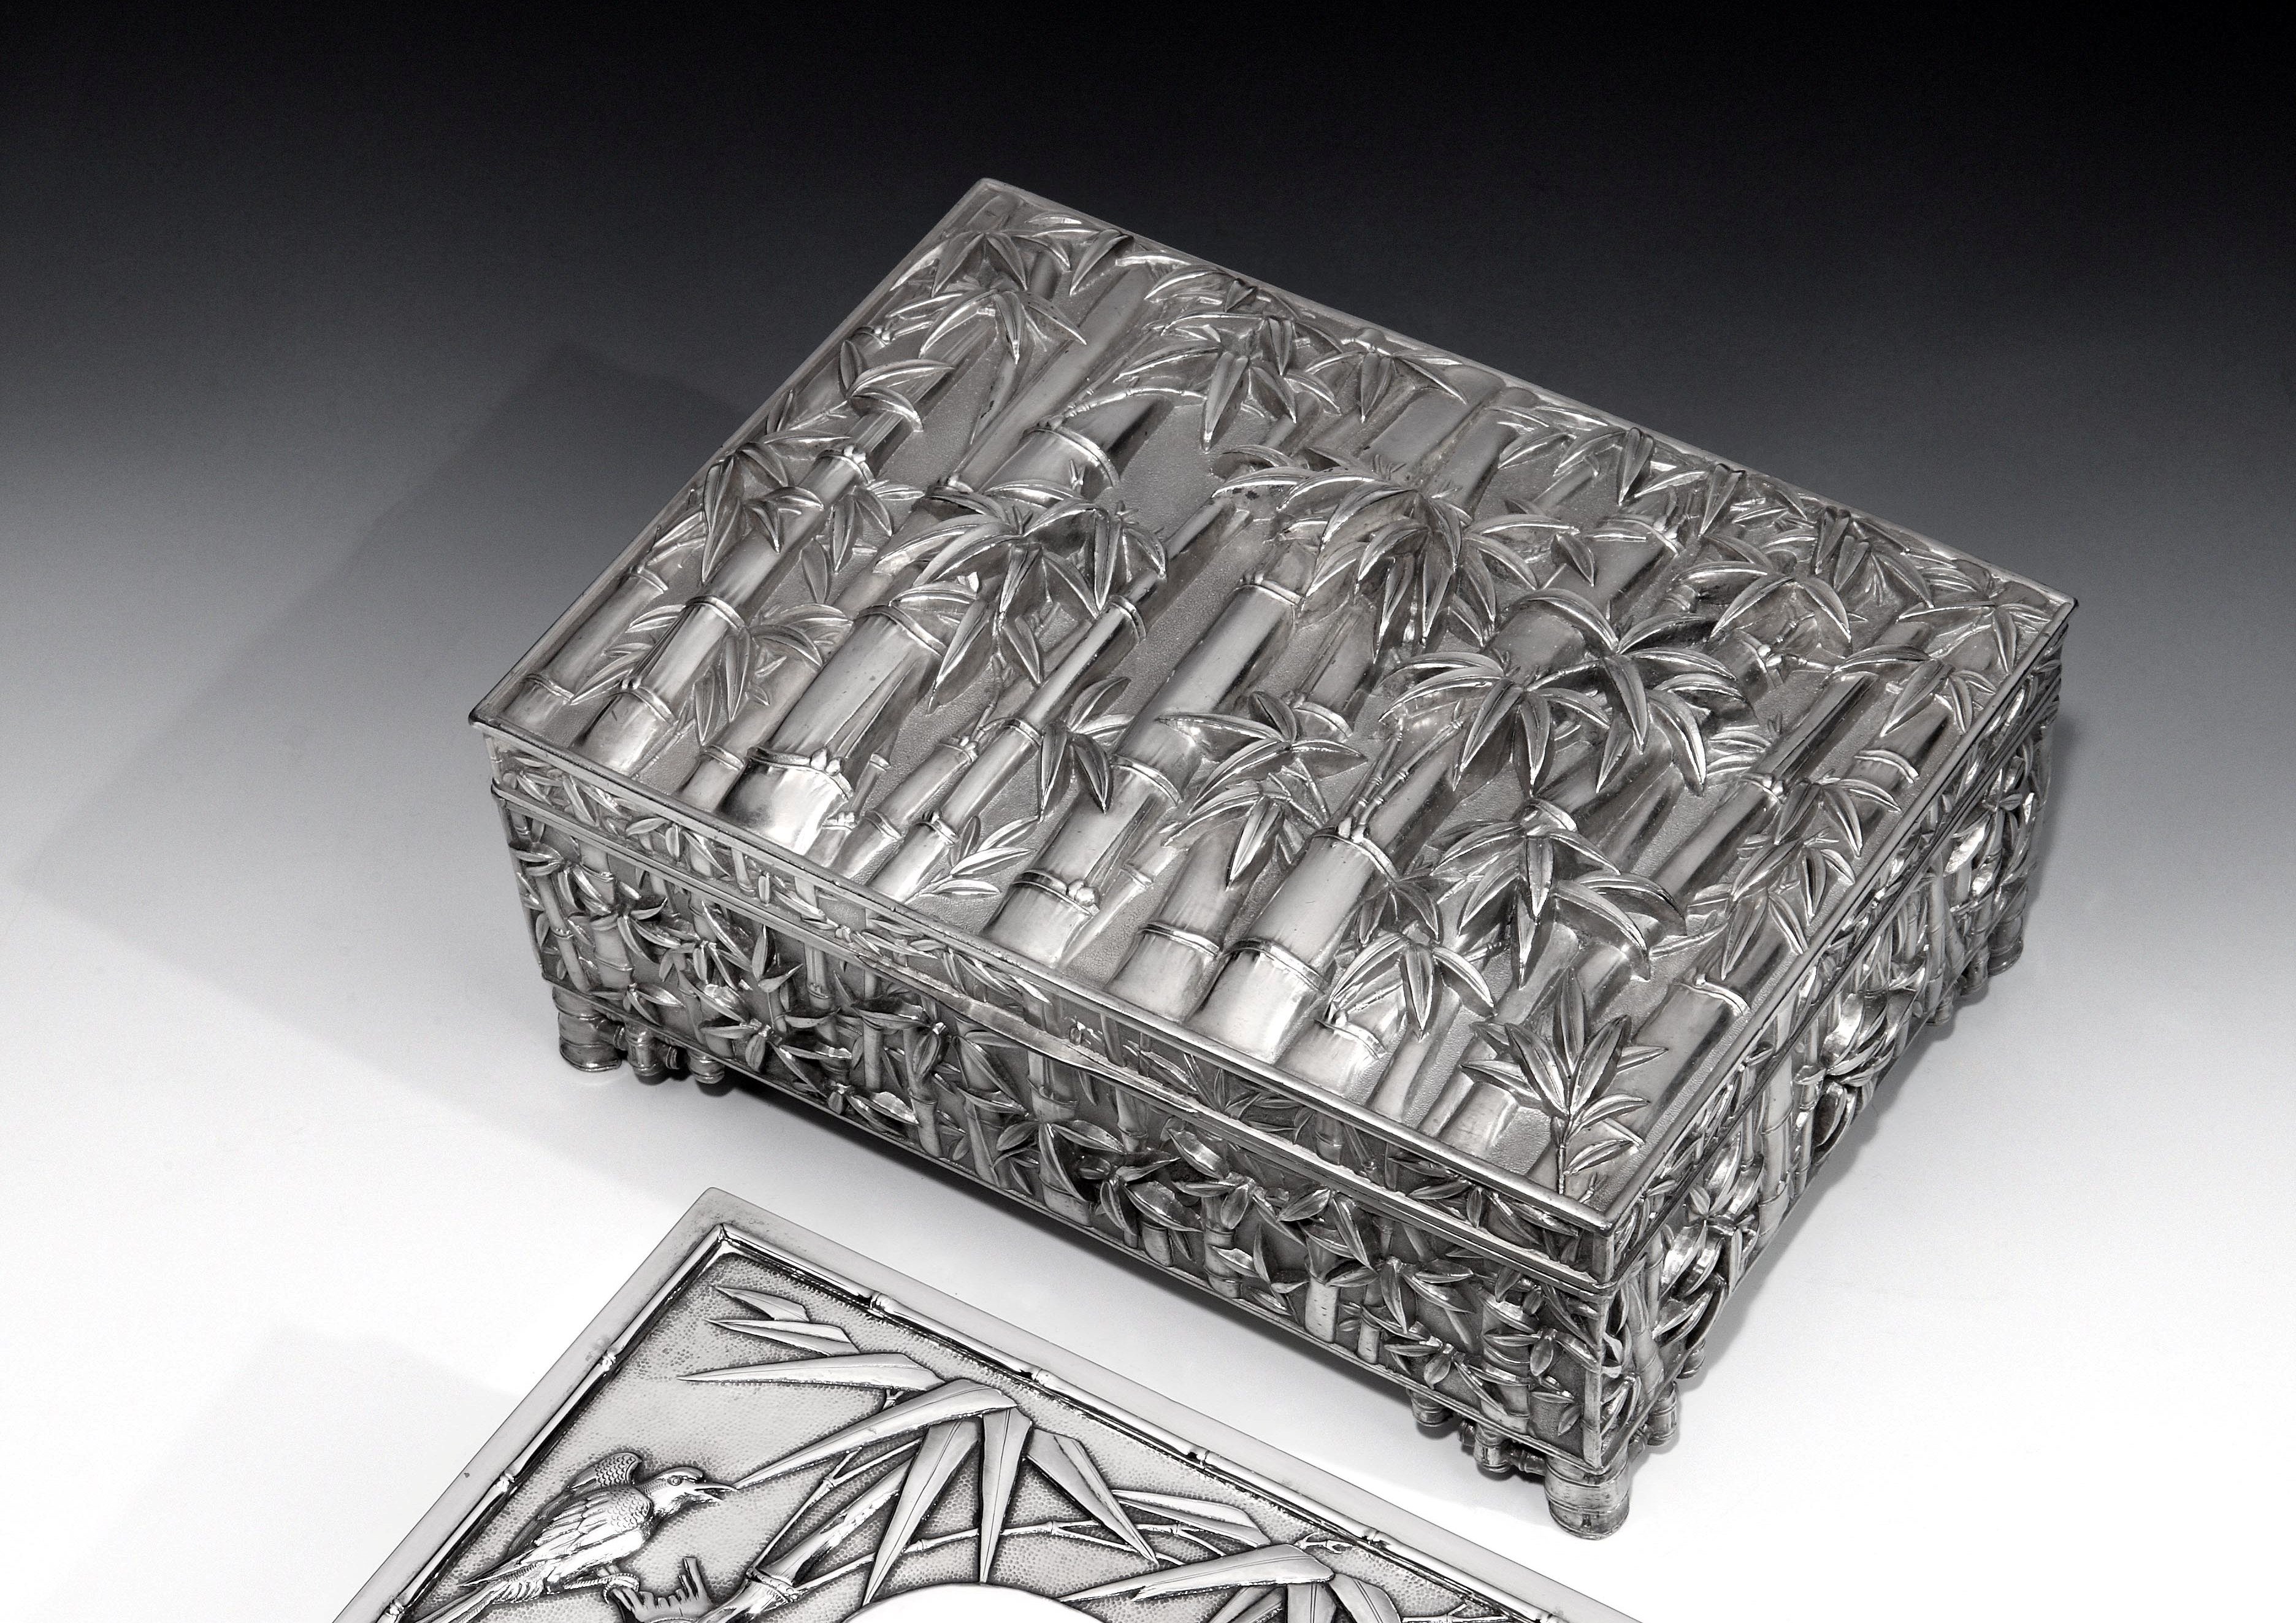 Chinese Silver Art Deco 'Bamboo' Jewel Box ca. 1925